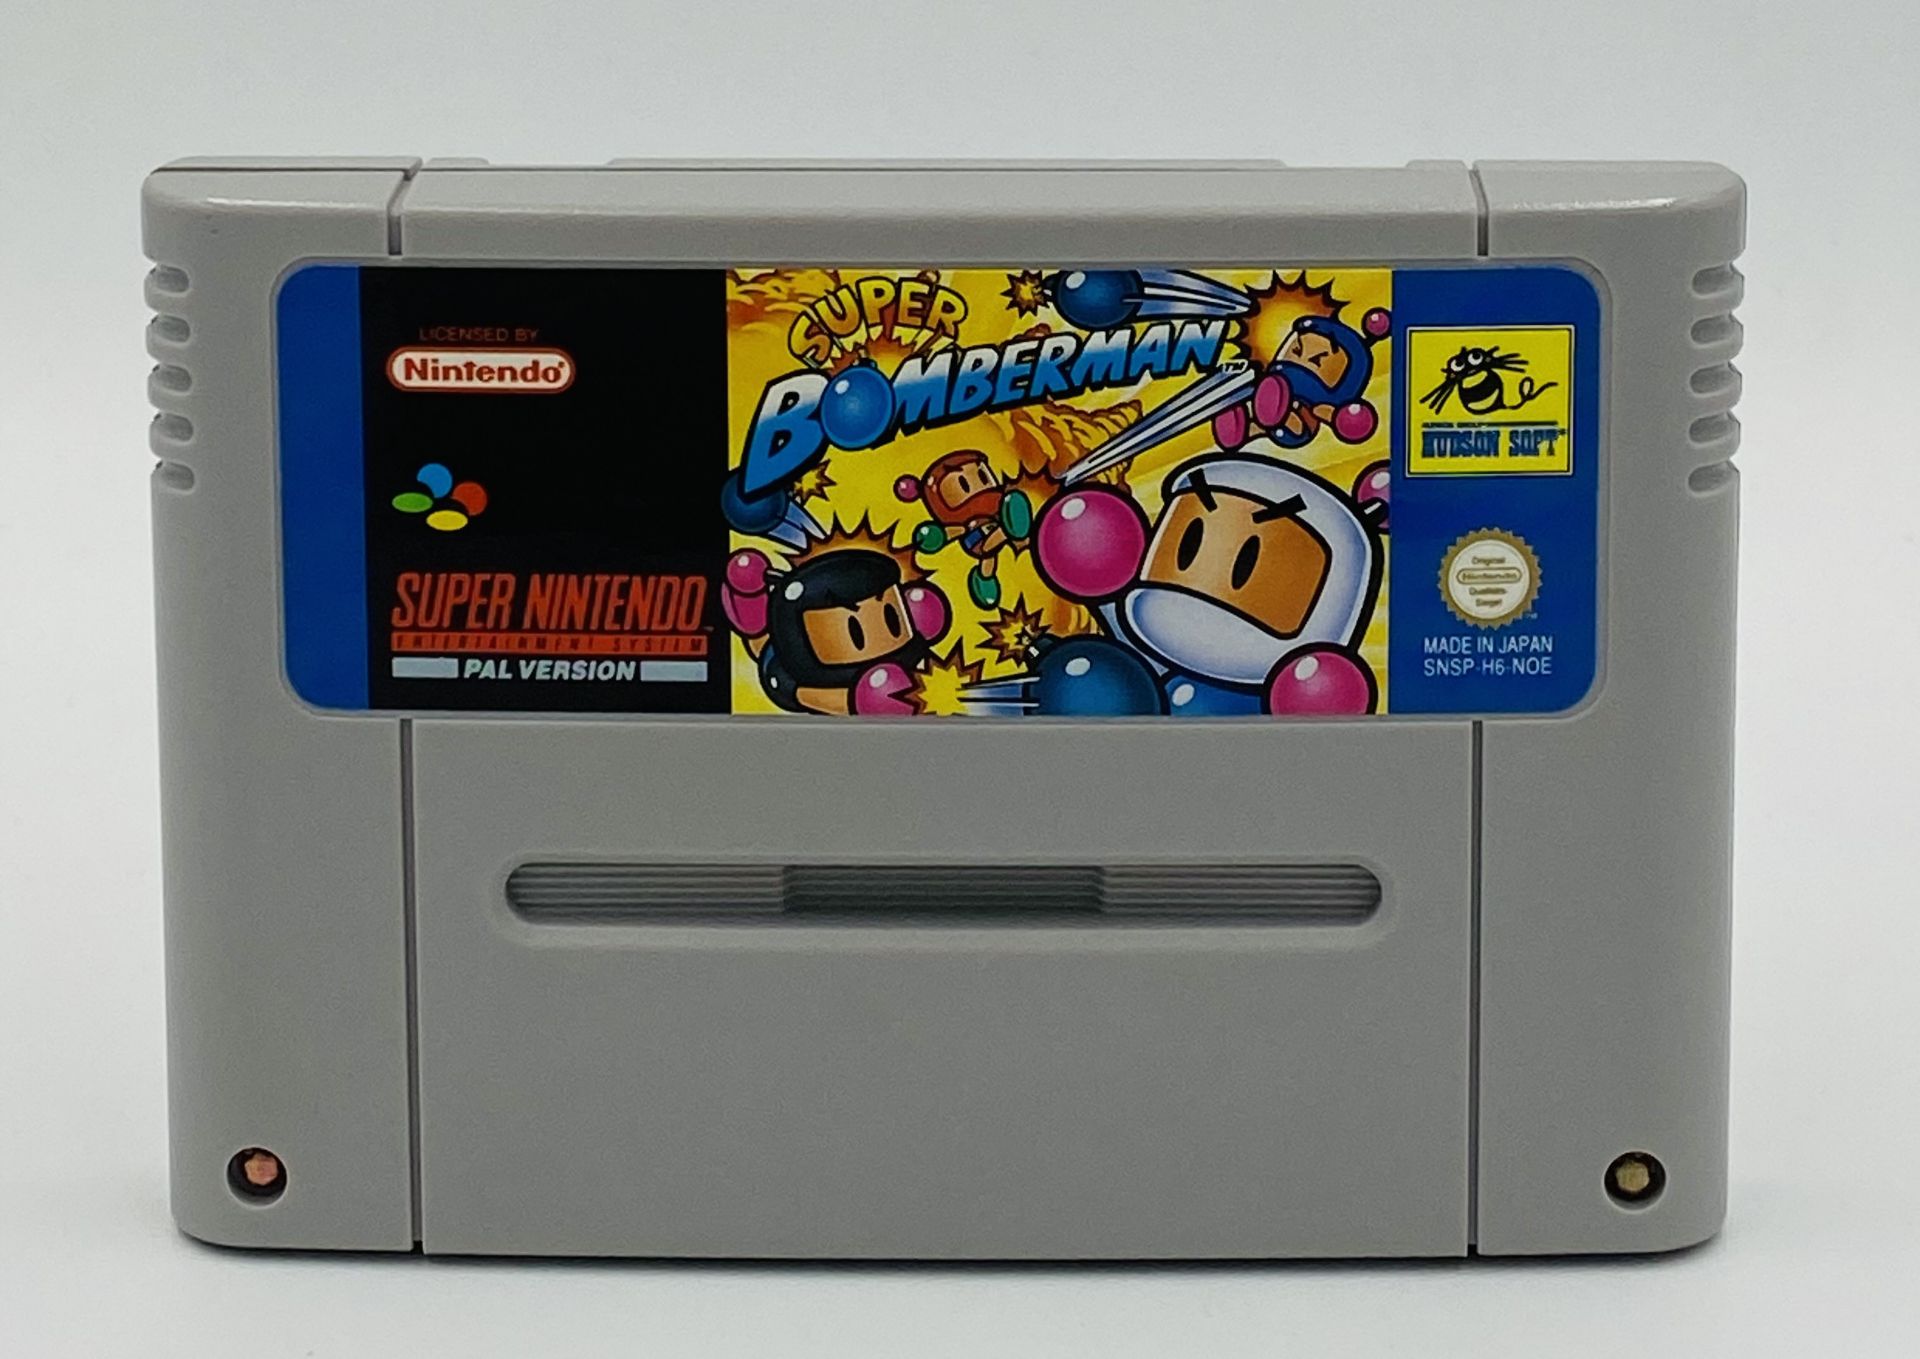 Super Nintendo Entertainment System, Super Bomberman, PALversion, boxed - Image 4 of 5